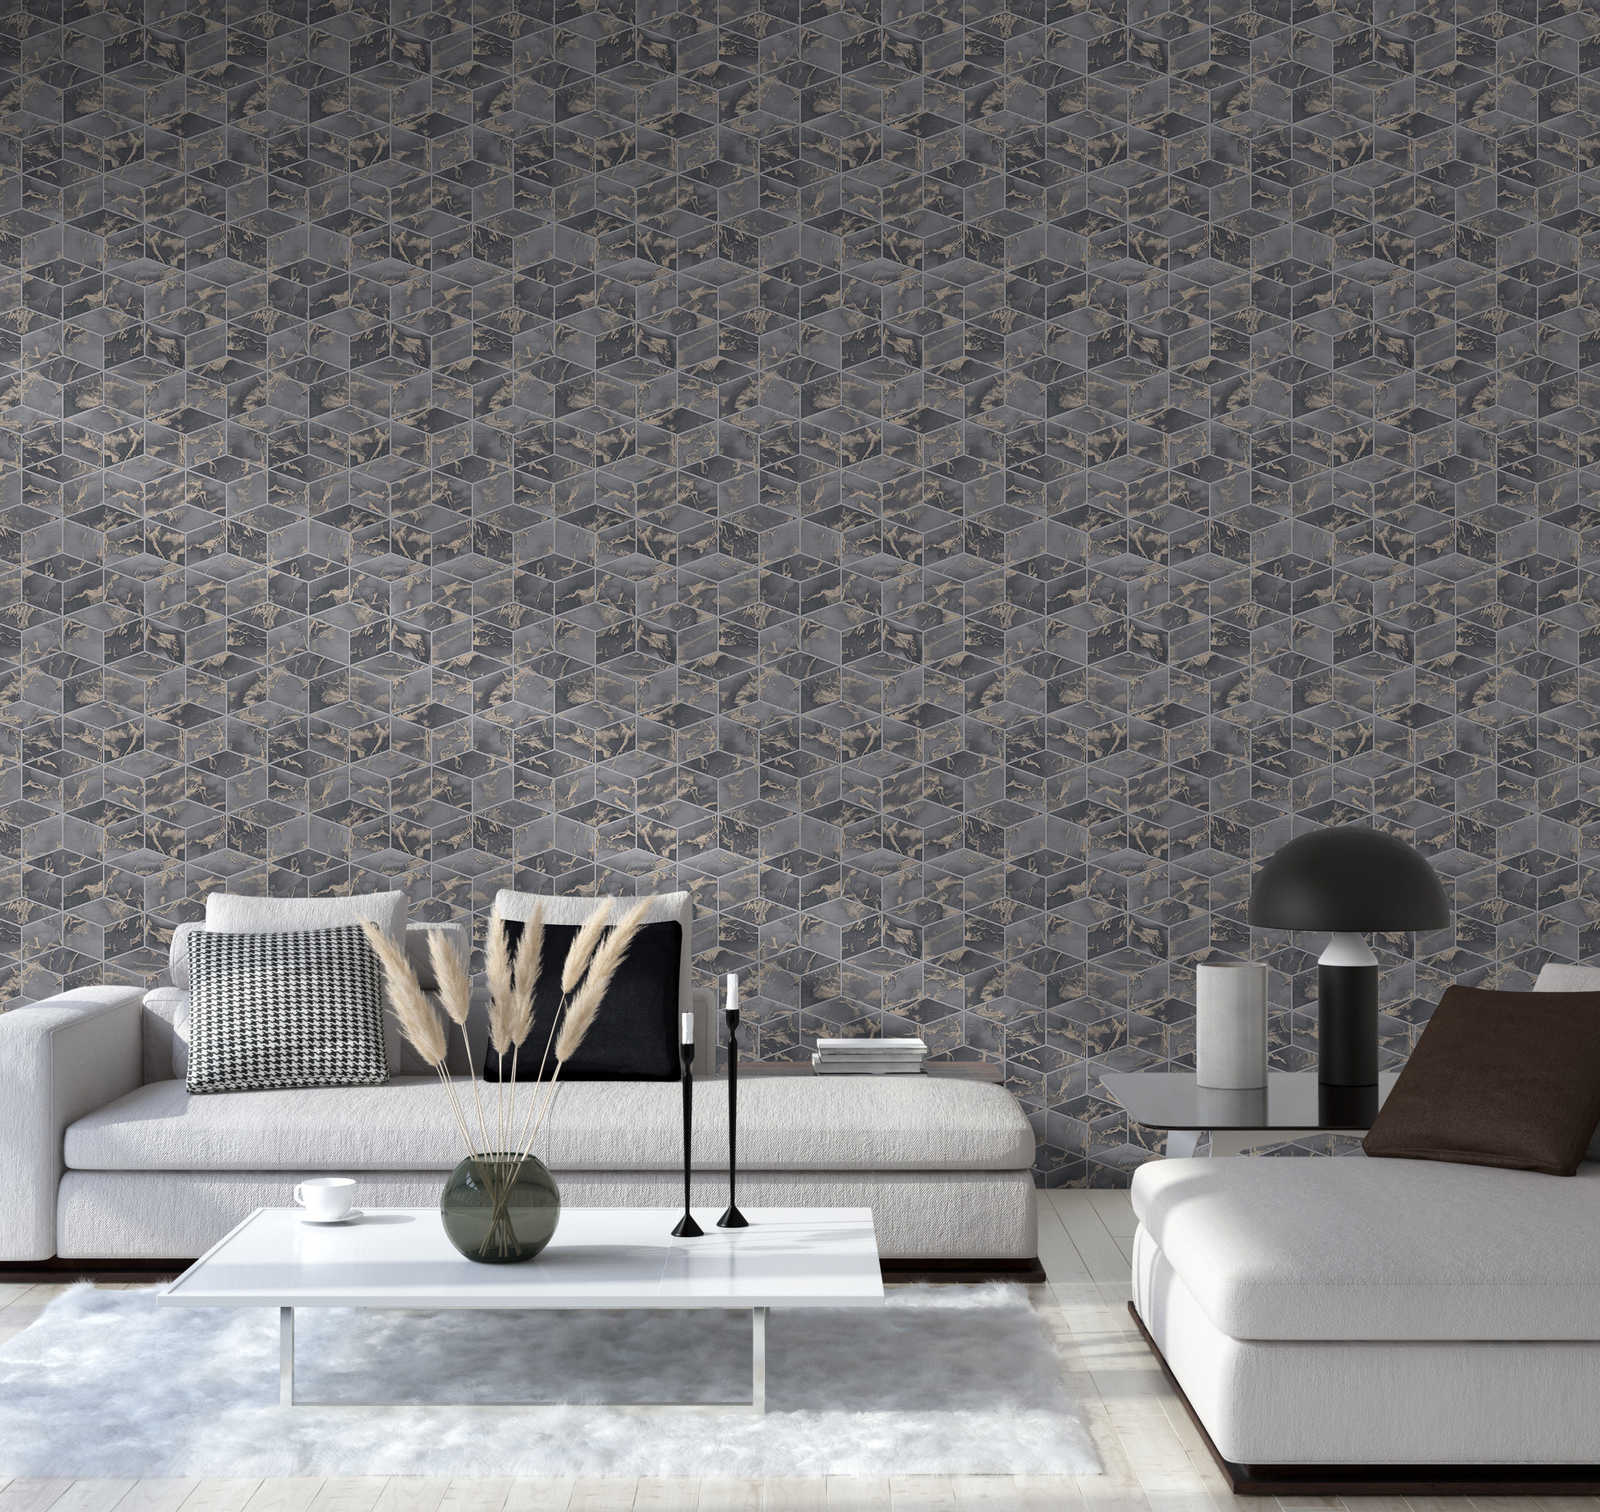             Wallpaper tile look with gold marbling - beige, grey, metallic
        